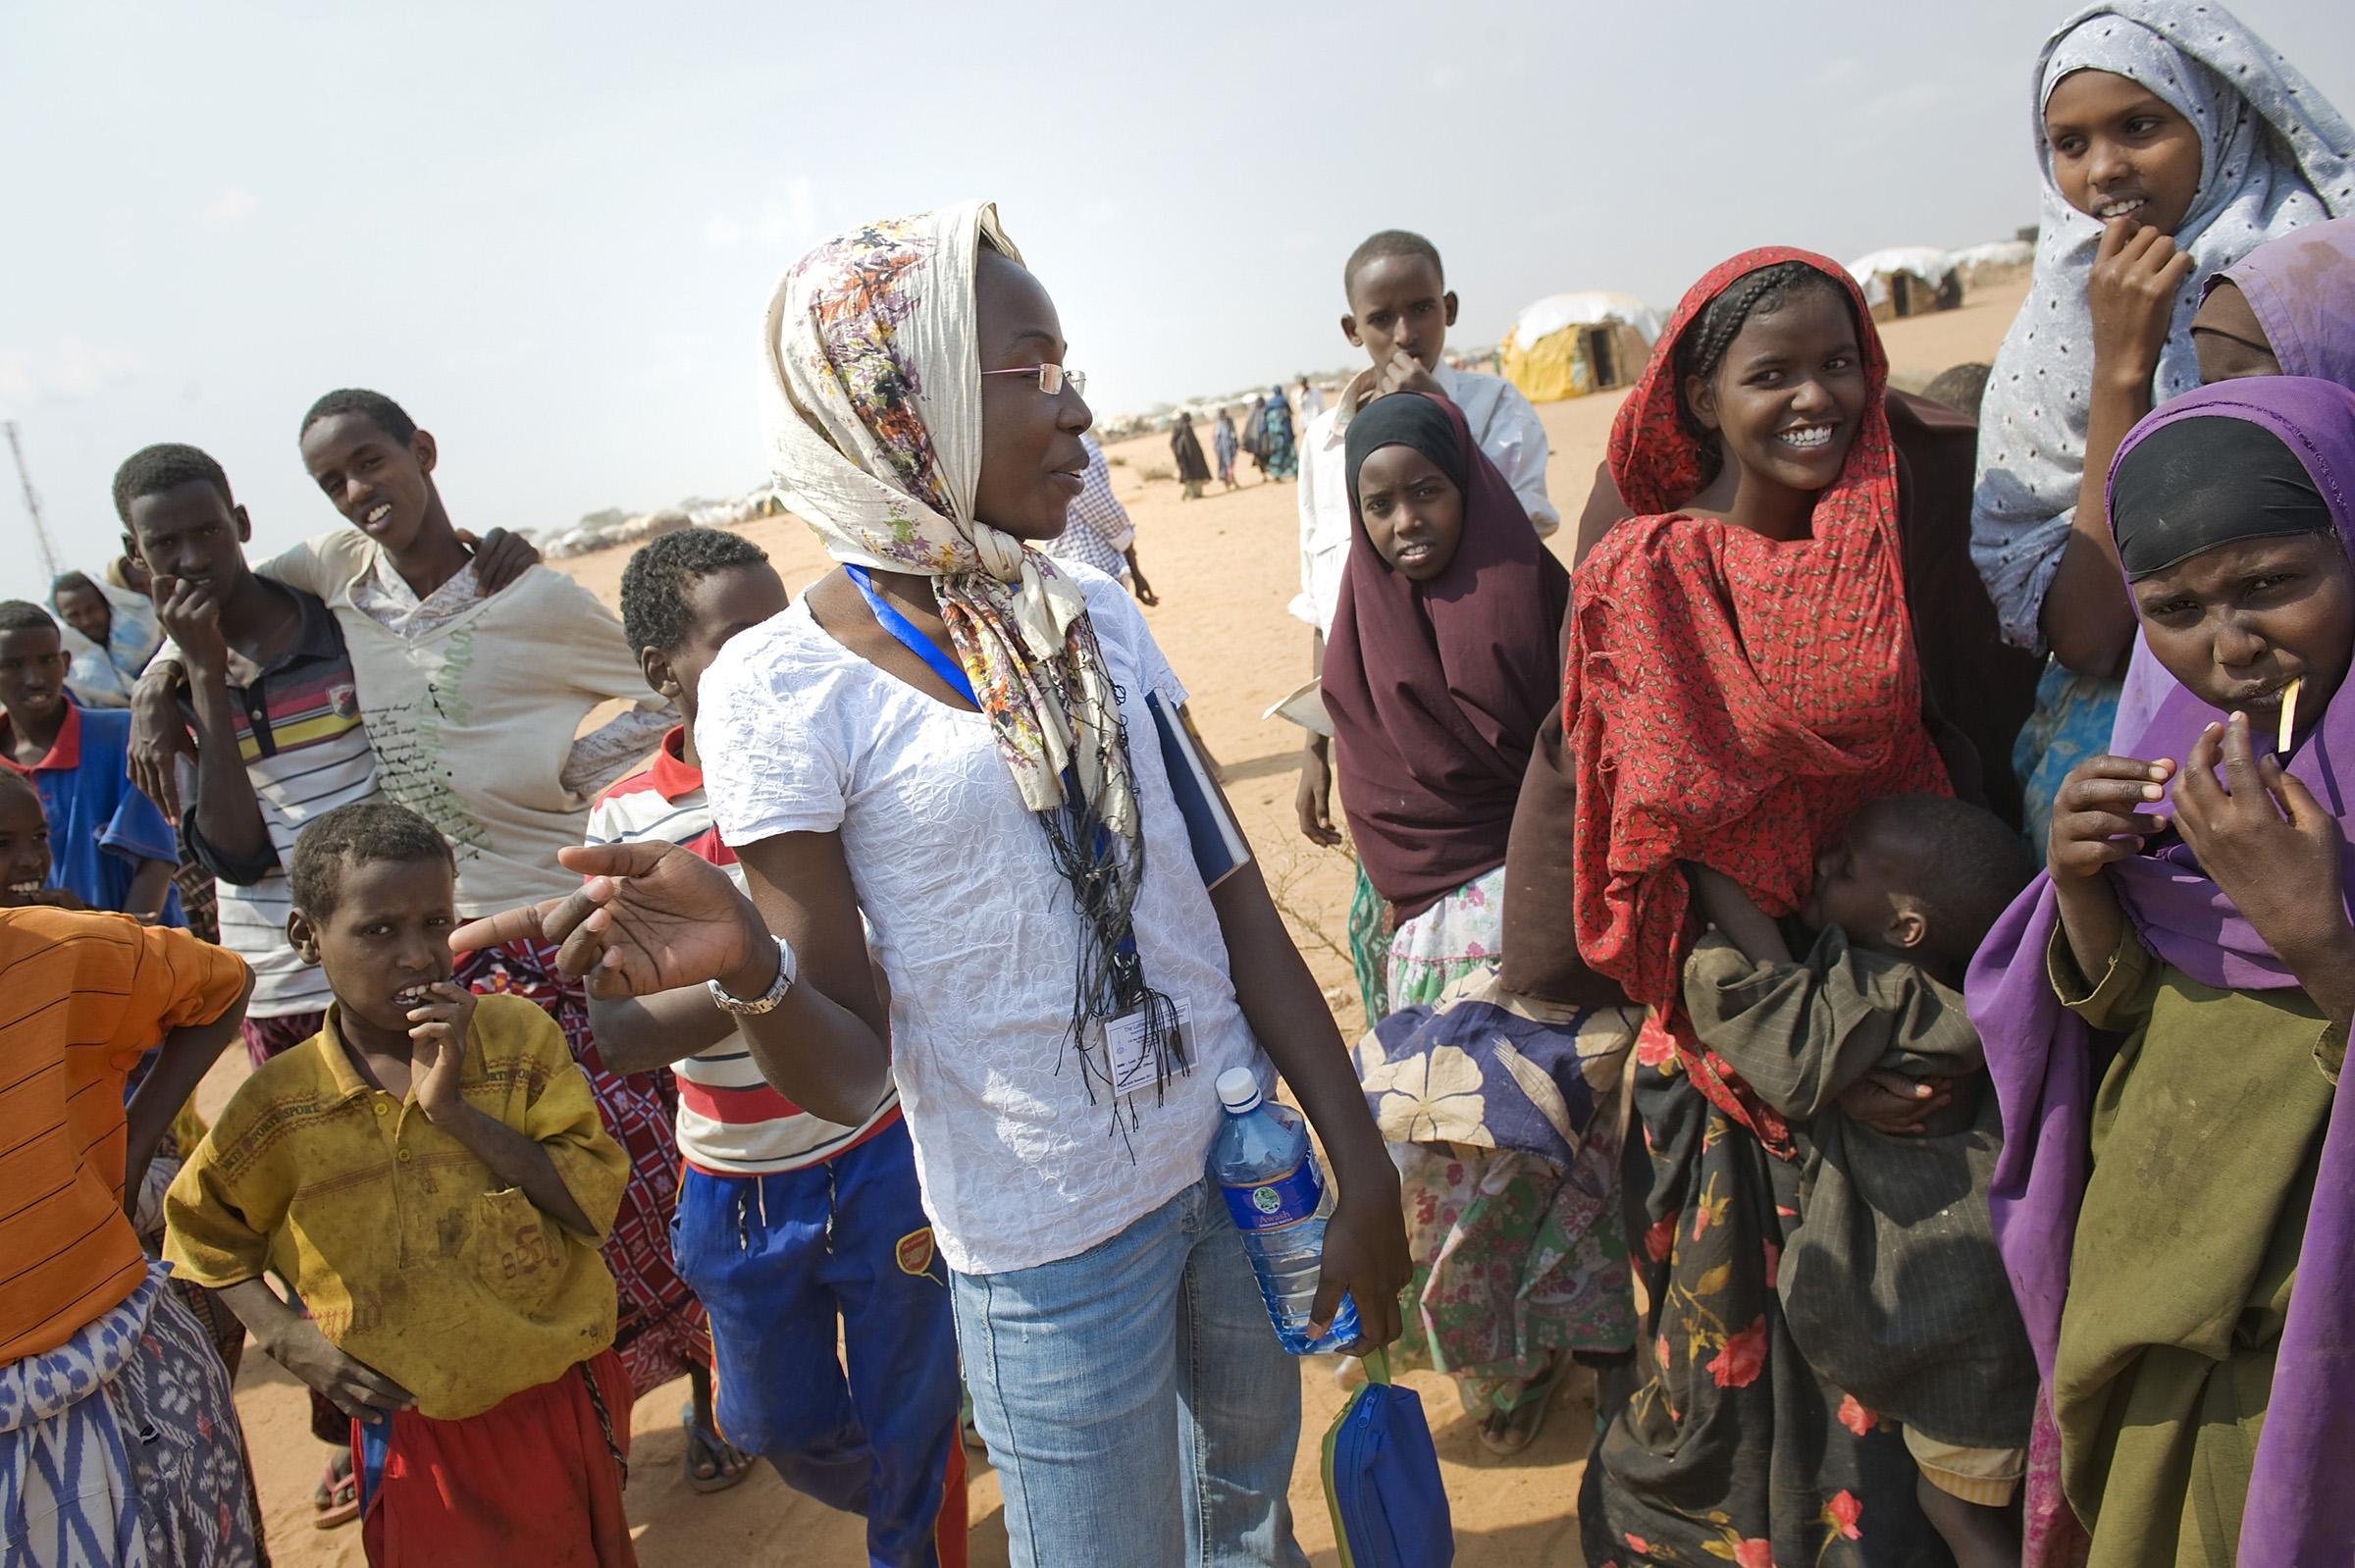 LWF worker Leah Odongo speaks with women in Dadaab refugee camp. Photo: LWF/Jonathan Ernst